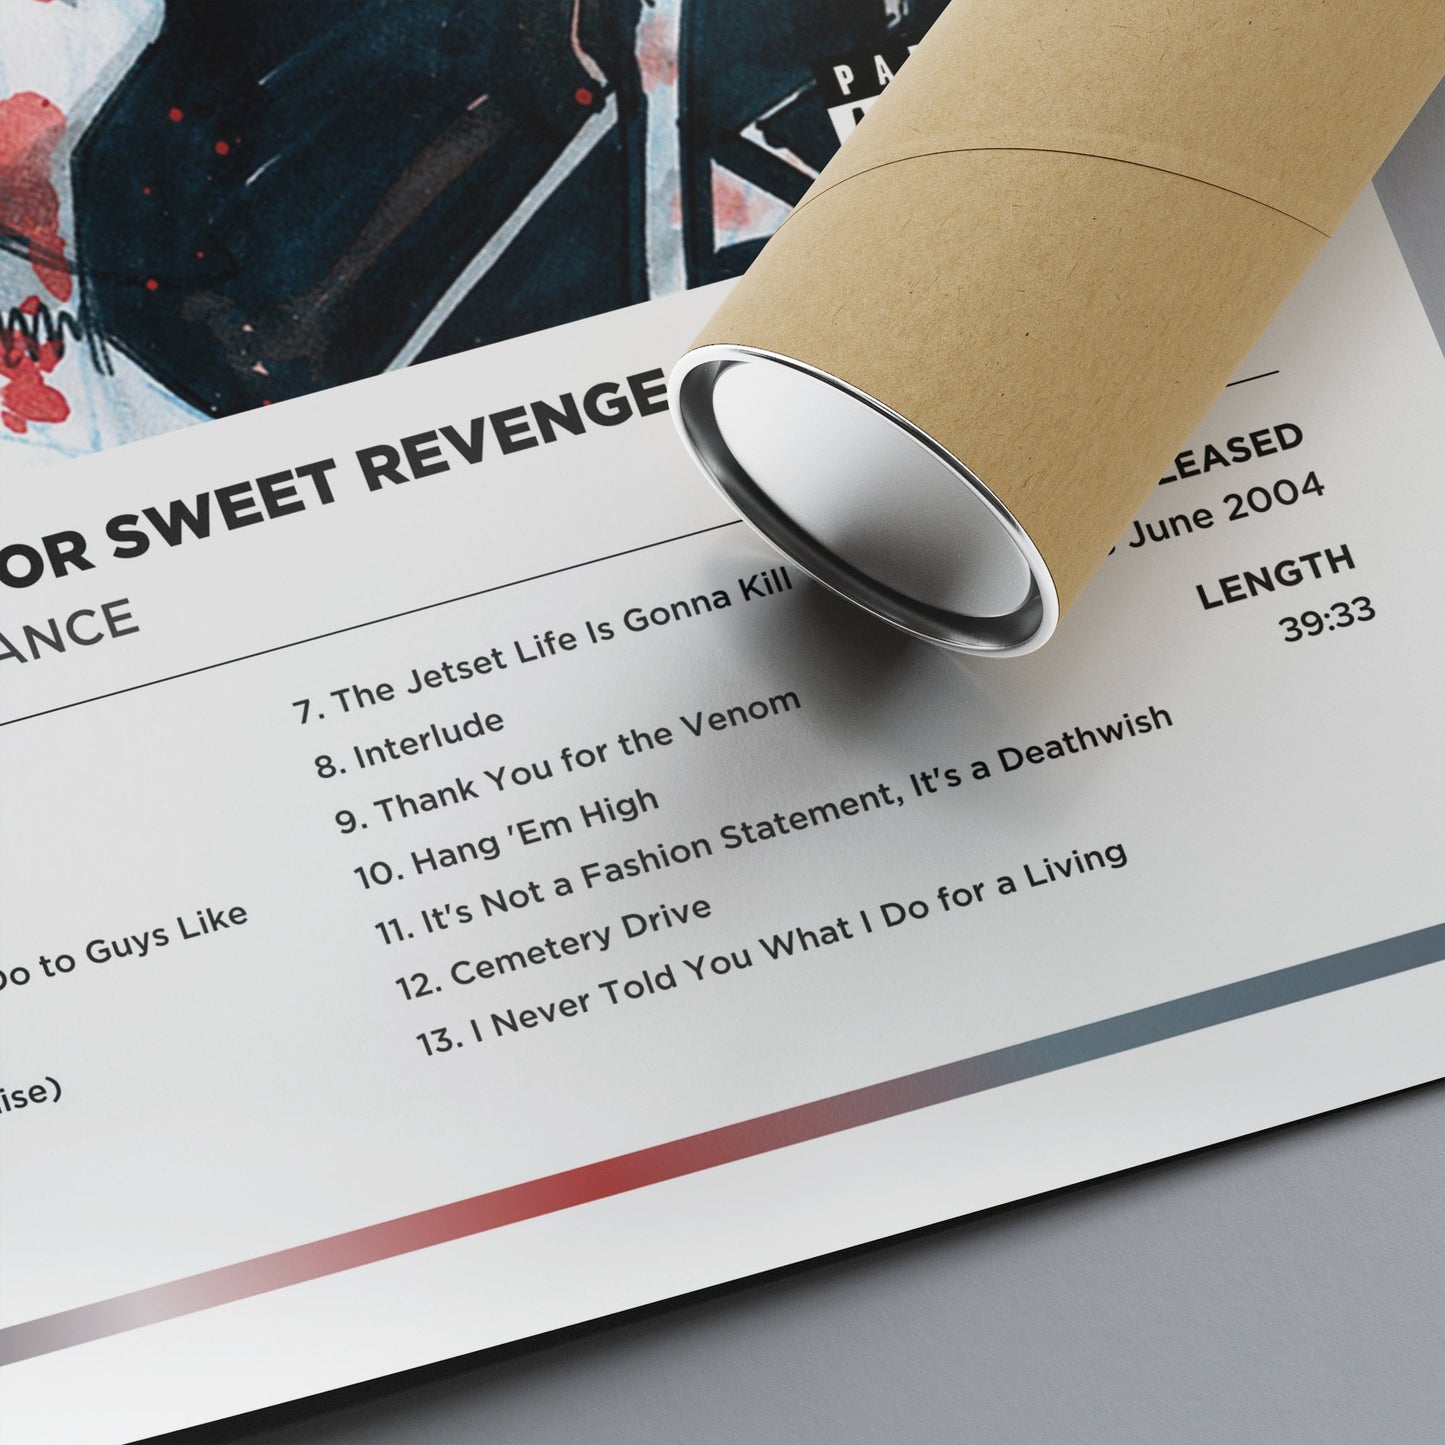 My Chemical Romance - Three Cheers for Sweet Revenge Framed Poster Print | Polaroid Style | Album Cover Artwork